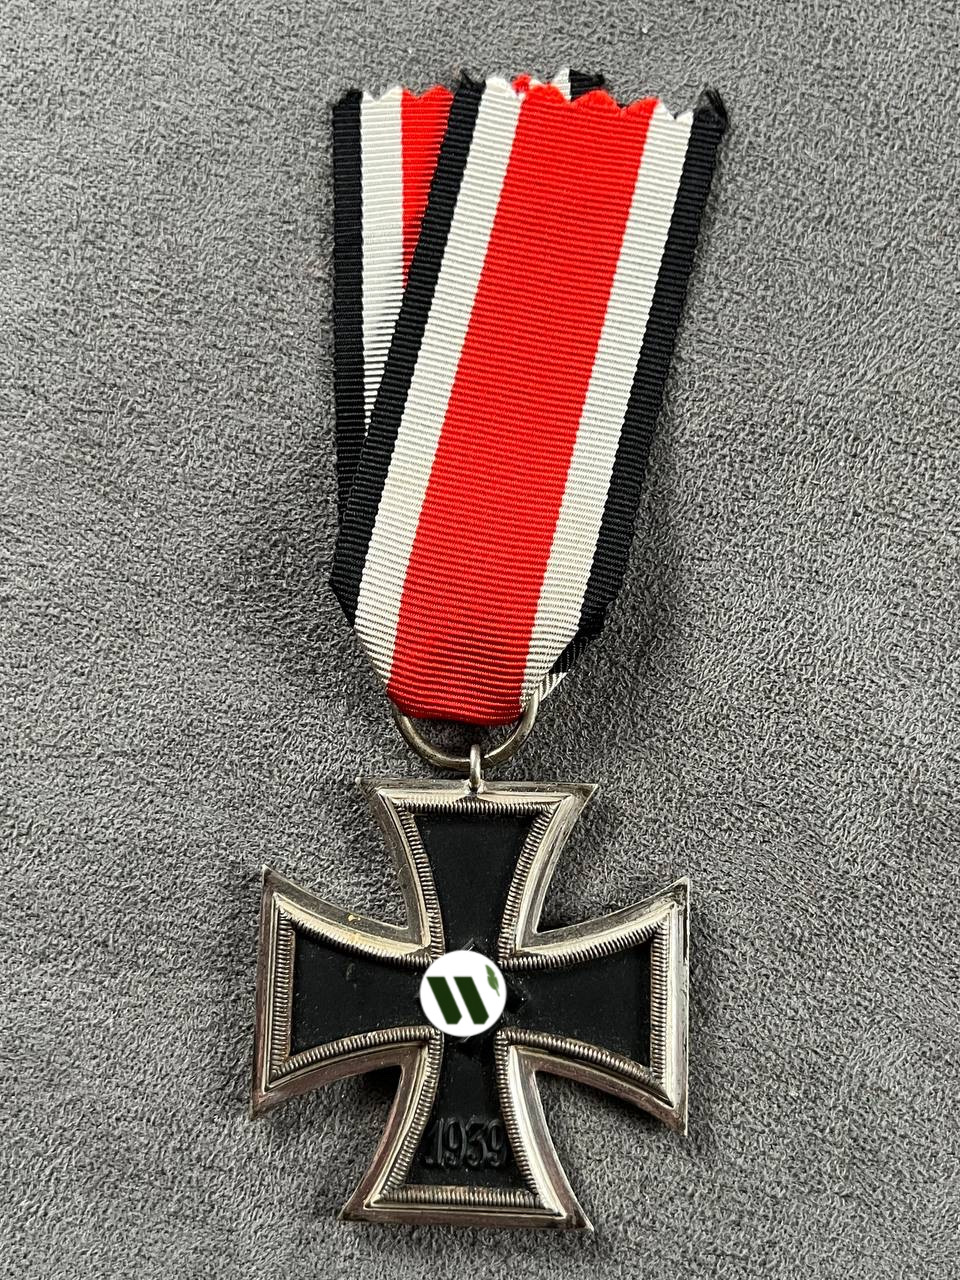 Железный крест 2 класса от Алексея Сильченко